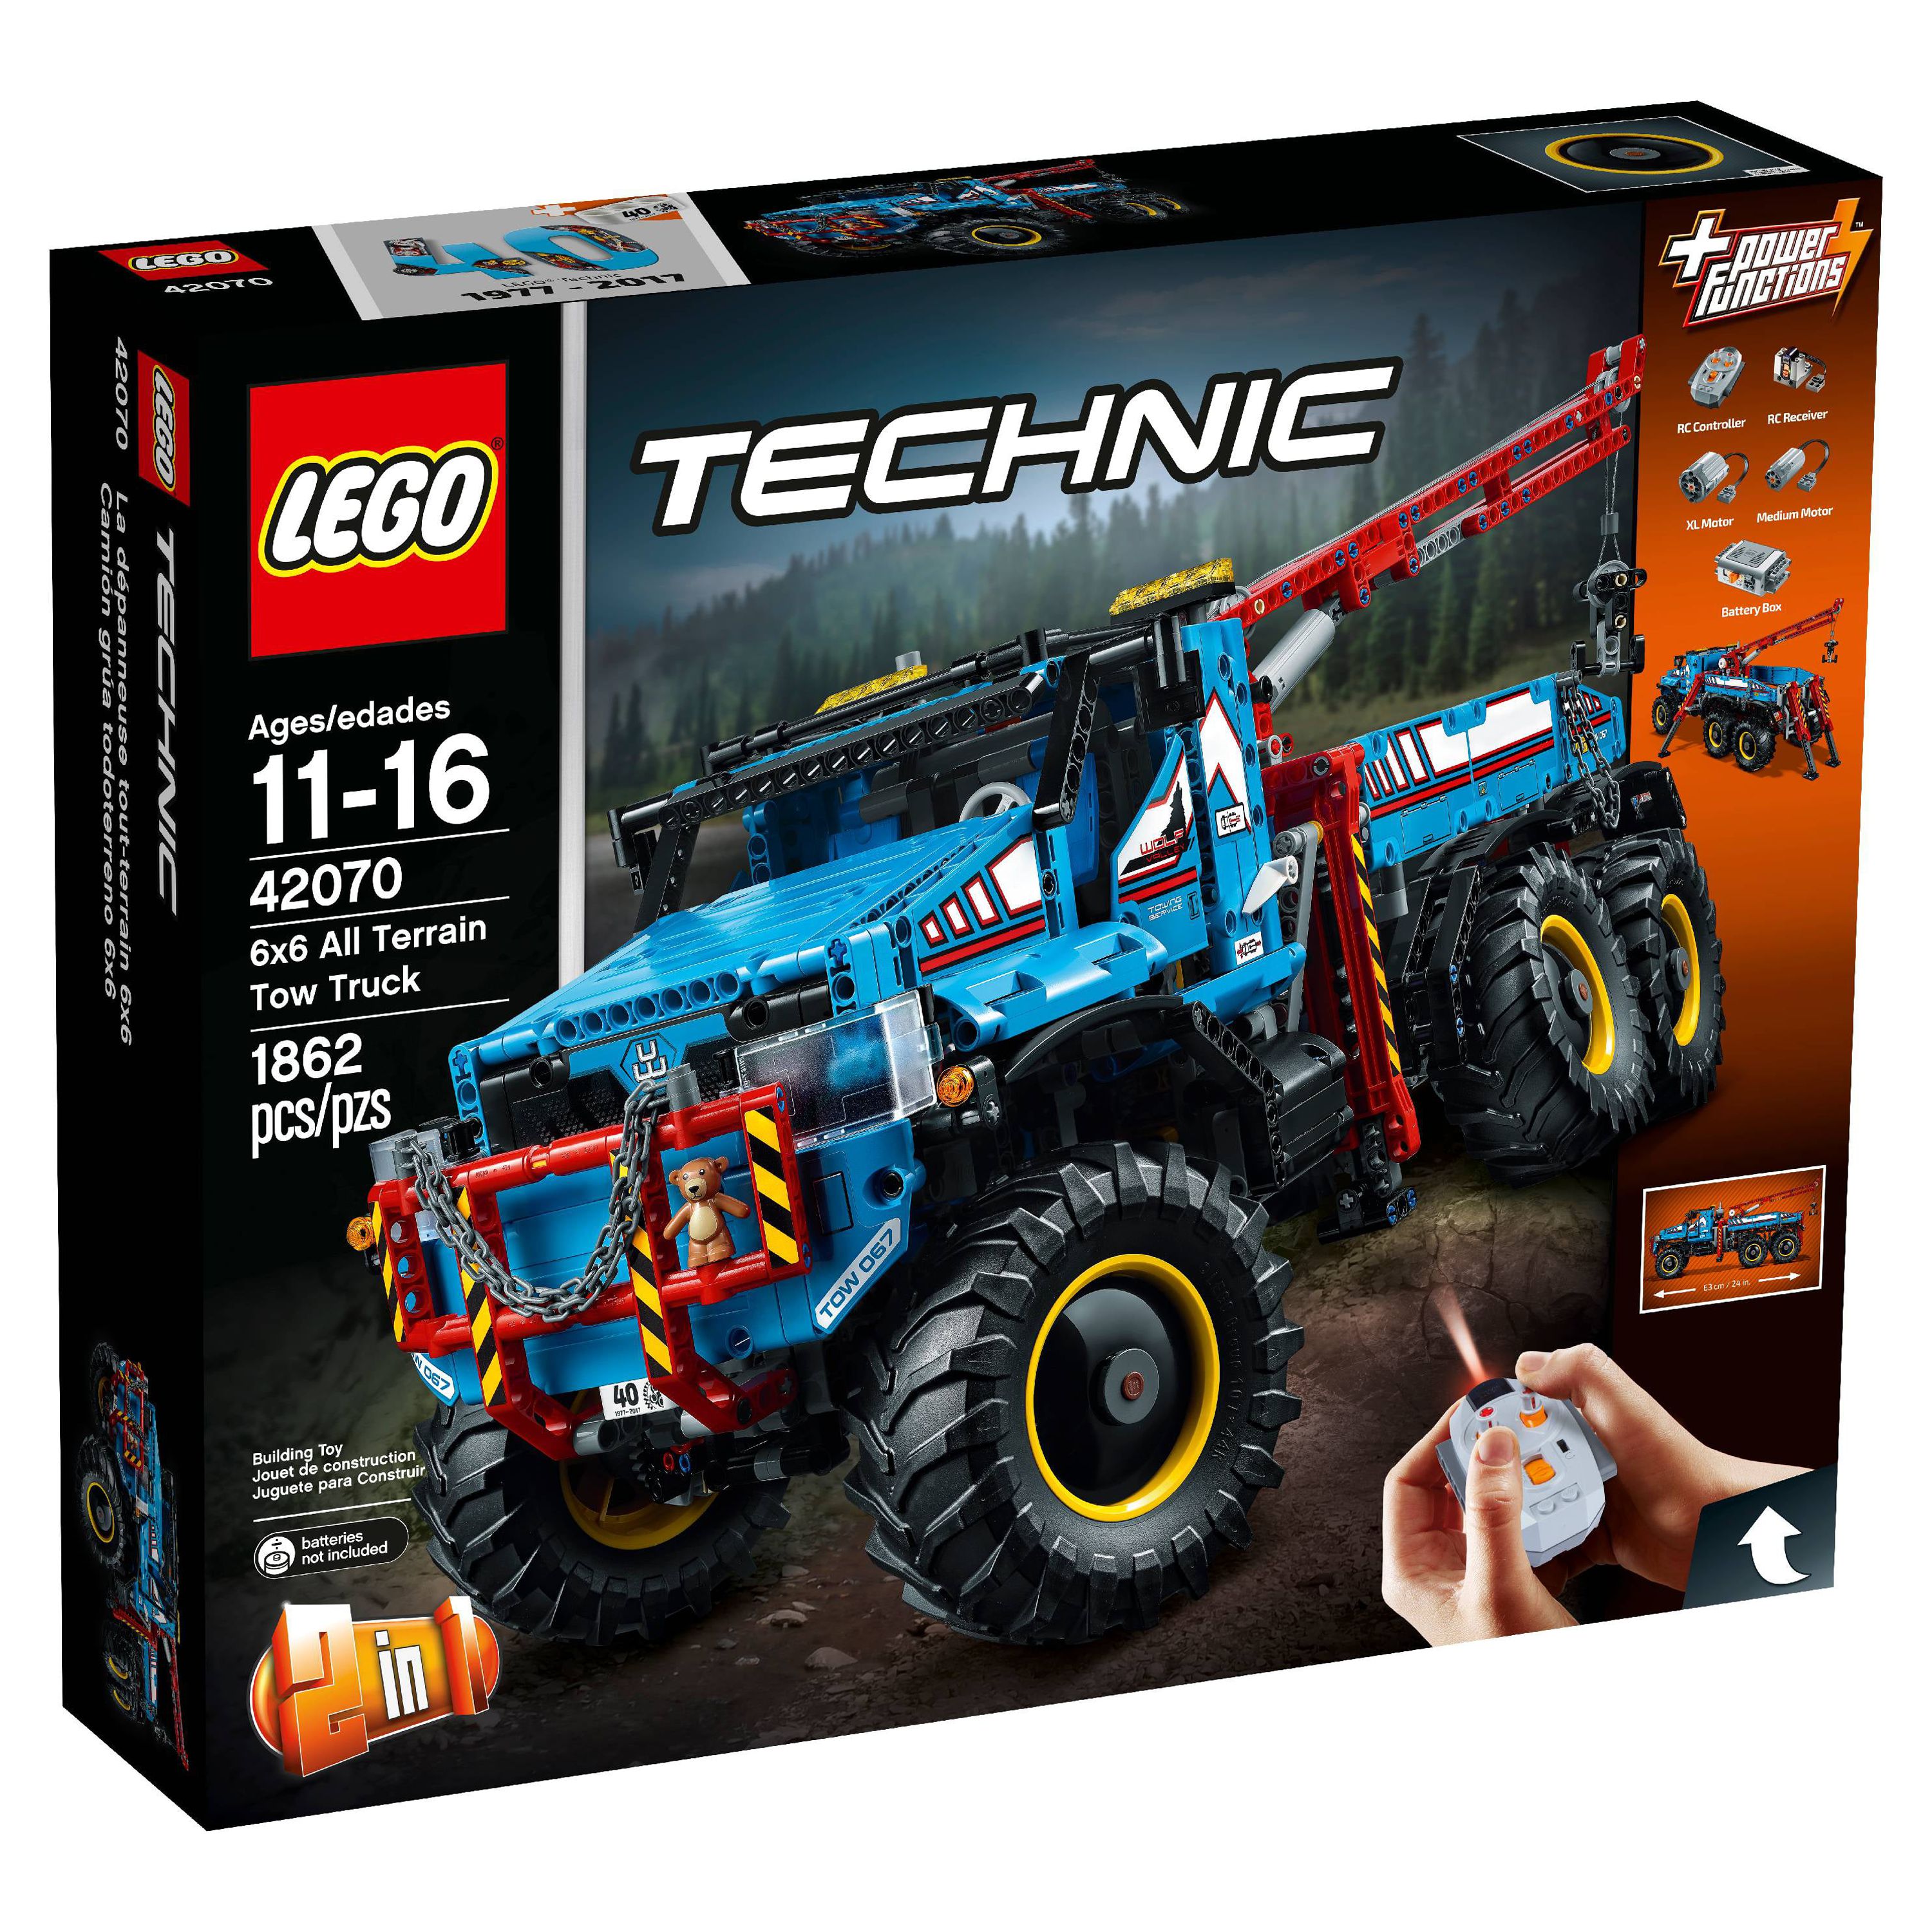 LEGO Technic 6x6 All Terrain Tow Truck 42070 - image 3 of 4